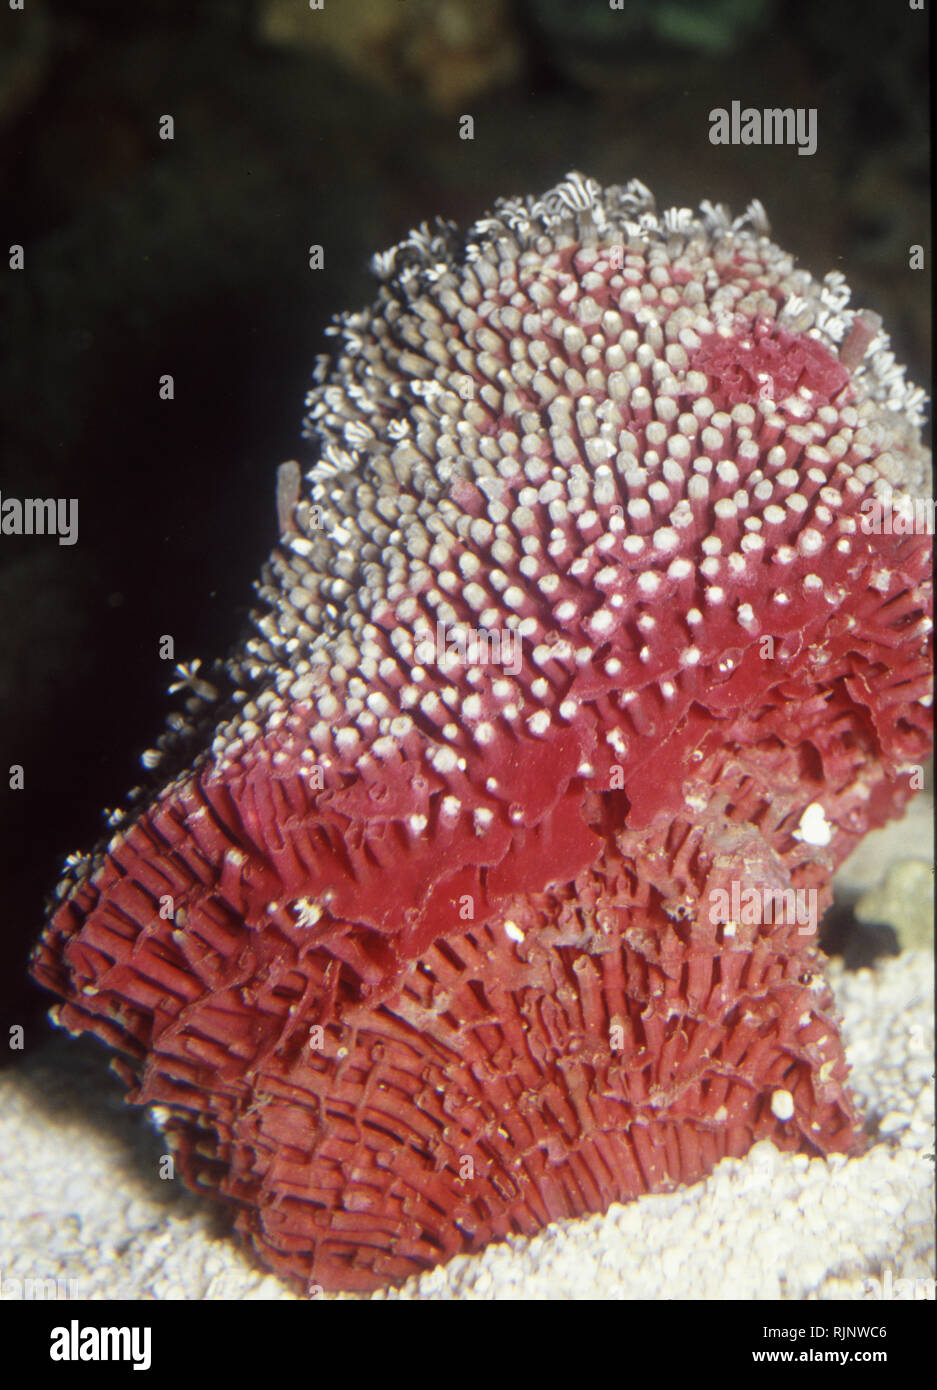 Organ Pipe coral (Tubipora musica) Foto de stock